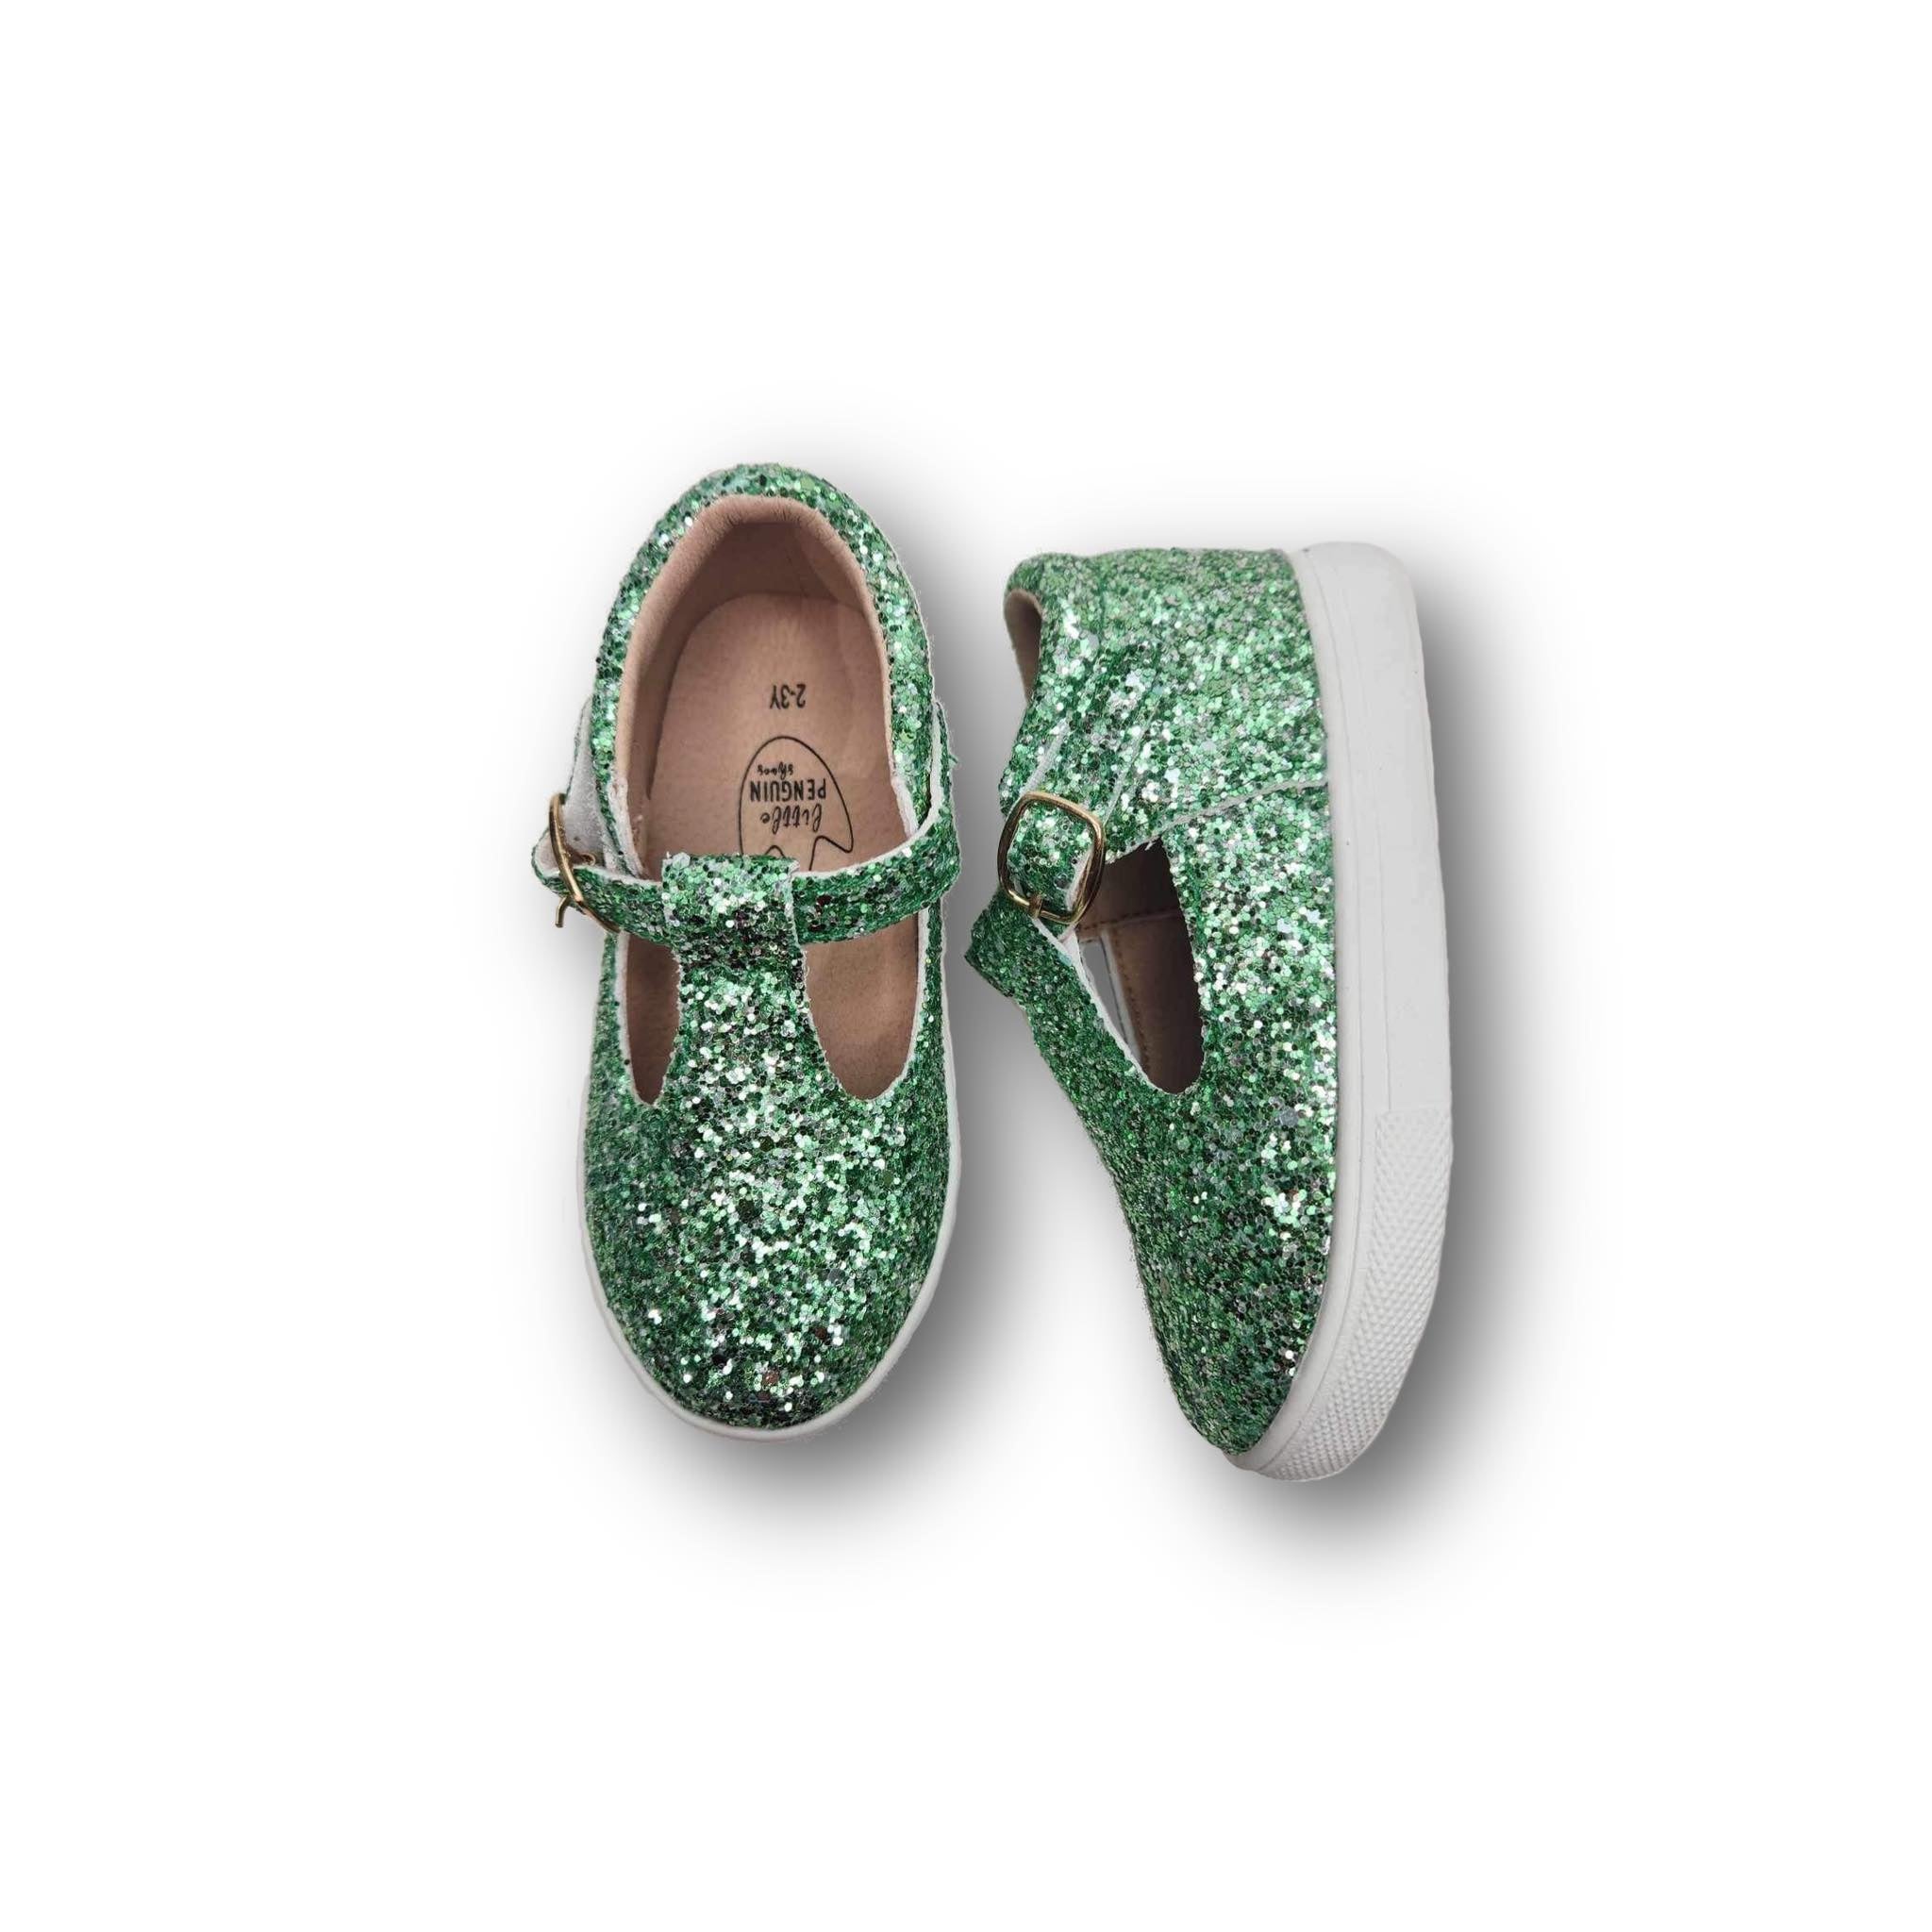 AUBREIGH PLAY Children's T-Strap Sneaker in Green Sparkles